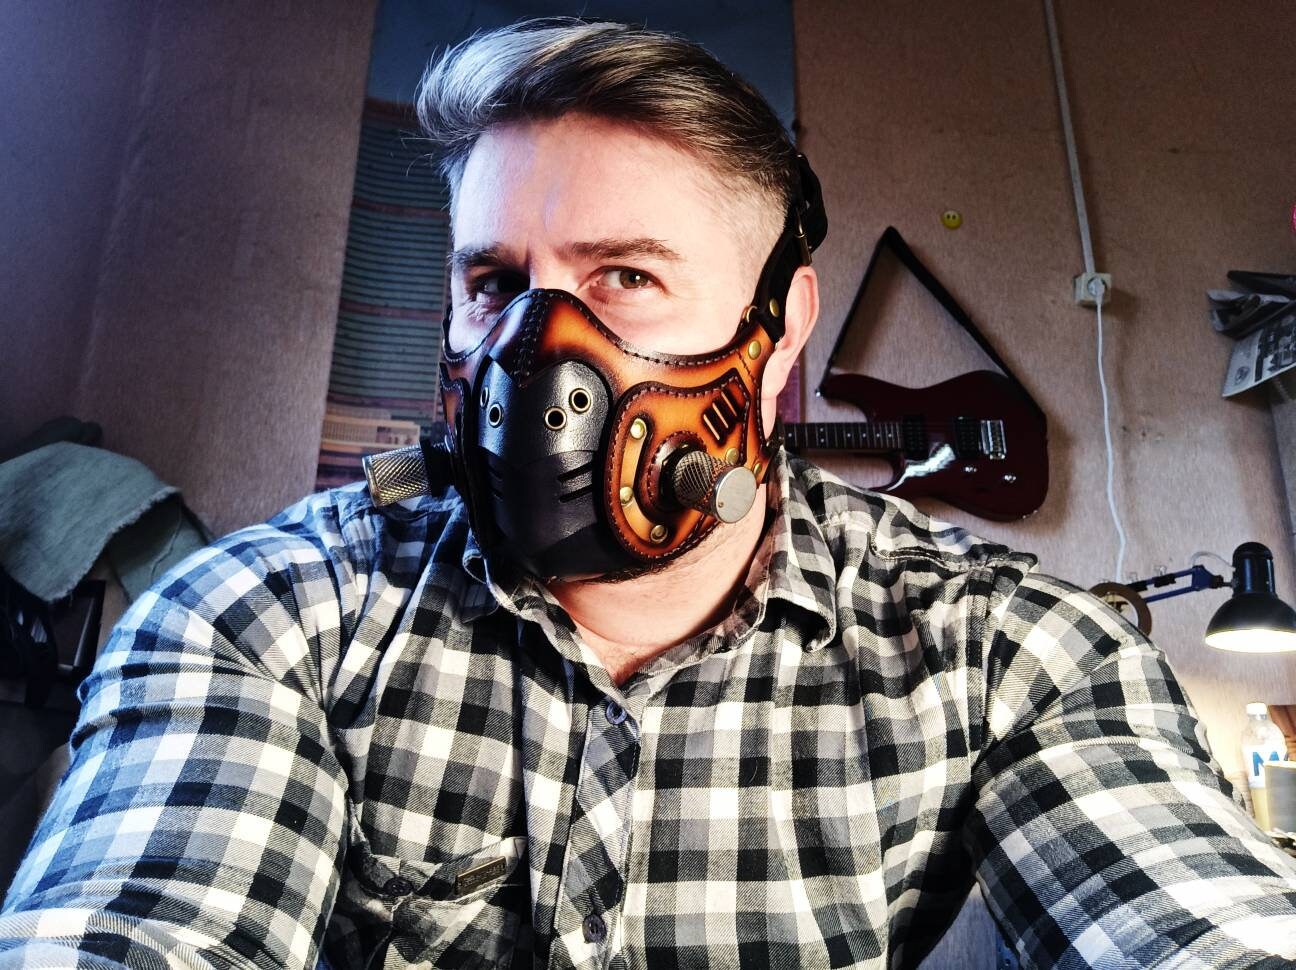 Leather Bike Mask, Biker Mask, Leather Mask,  Wind Protection Mask, MadMax Mask, Postapocalyptic Mask, Leather Mask.